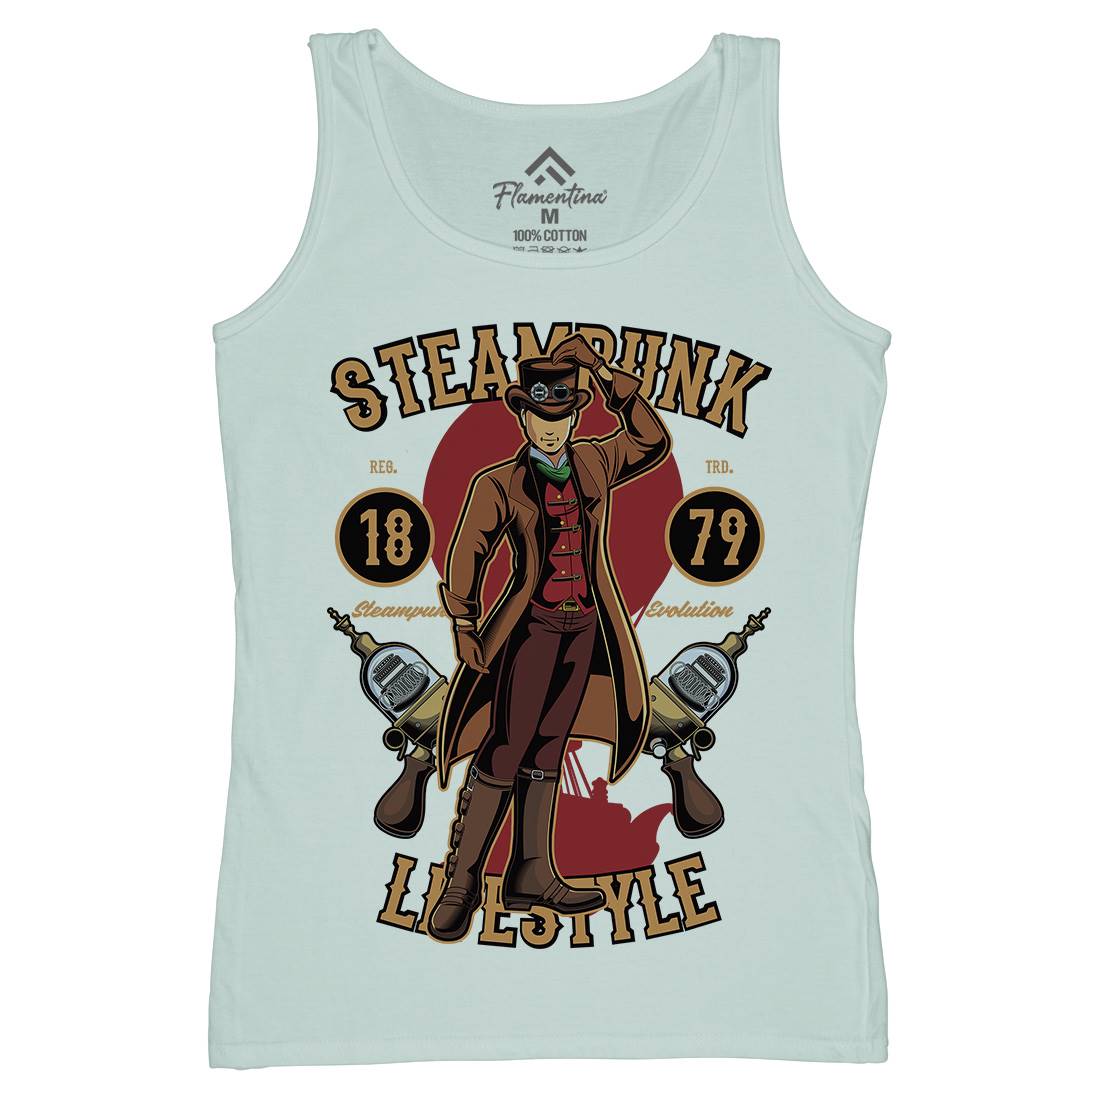 Lifestyle Womens Organic Tank Top Vest Steampunk C450